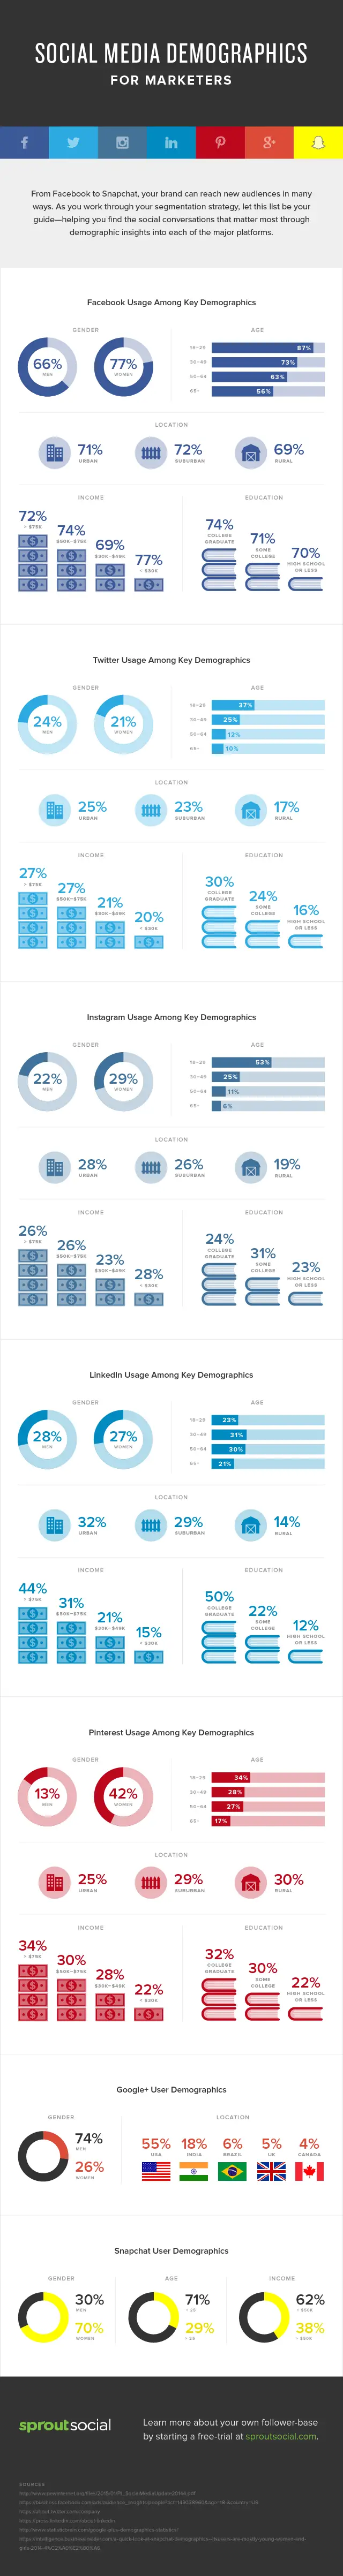 demographics-on-social-media-in-2015